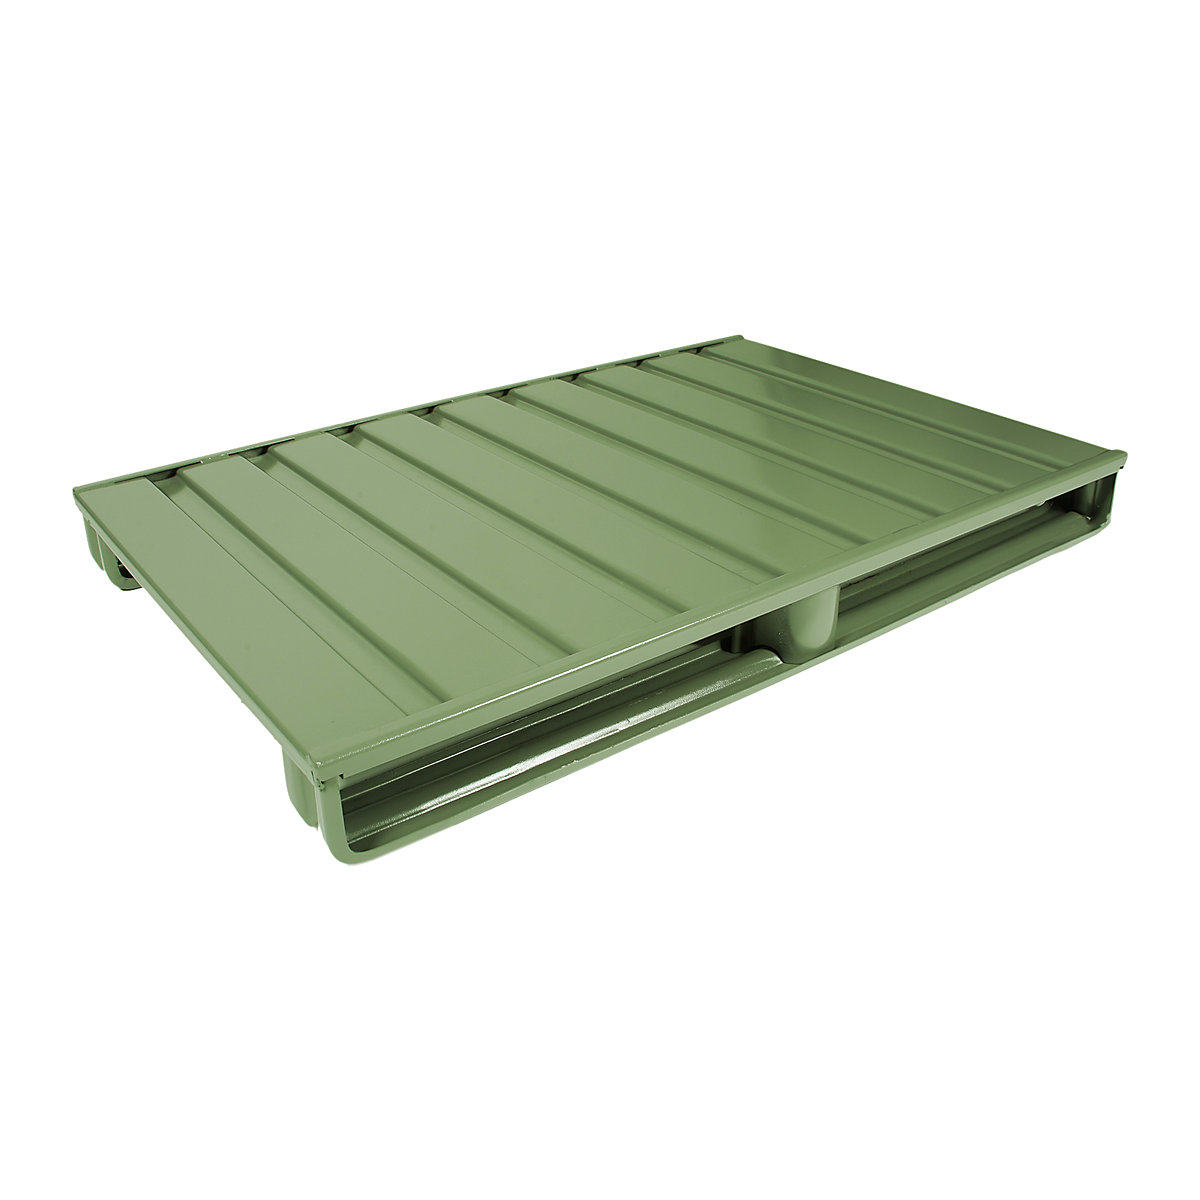 Palet plano de acero – Heson, L x A 1200 x 800 mm, carga máx. 2000 kg, verde reseda-4